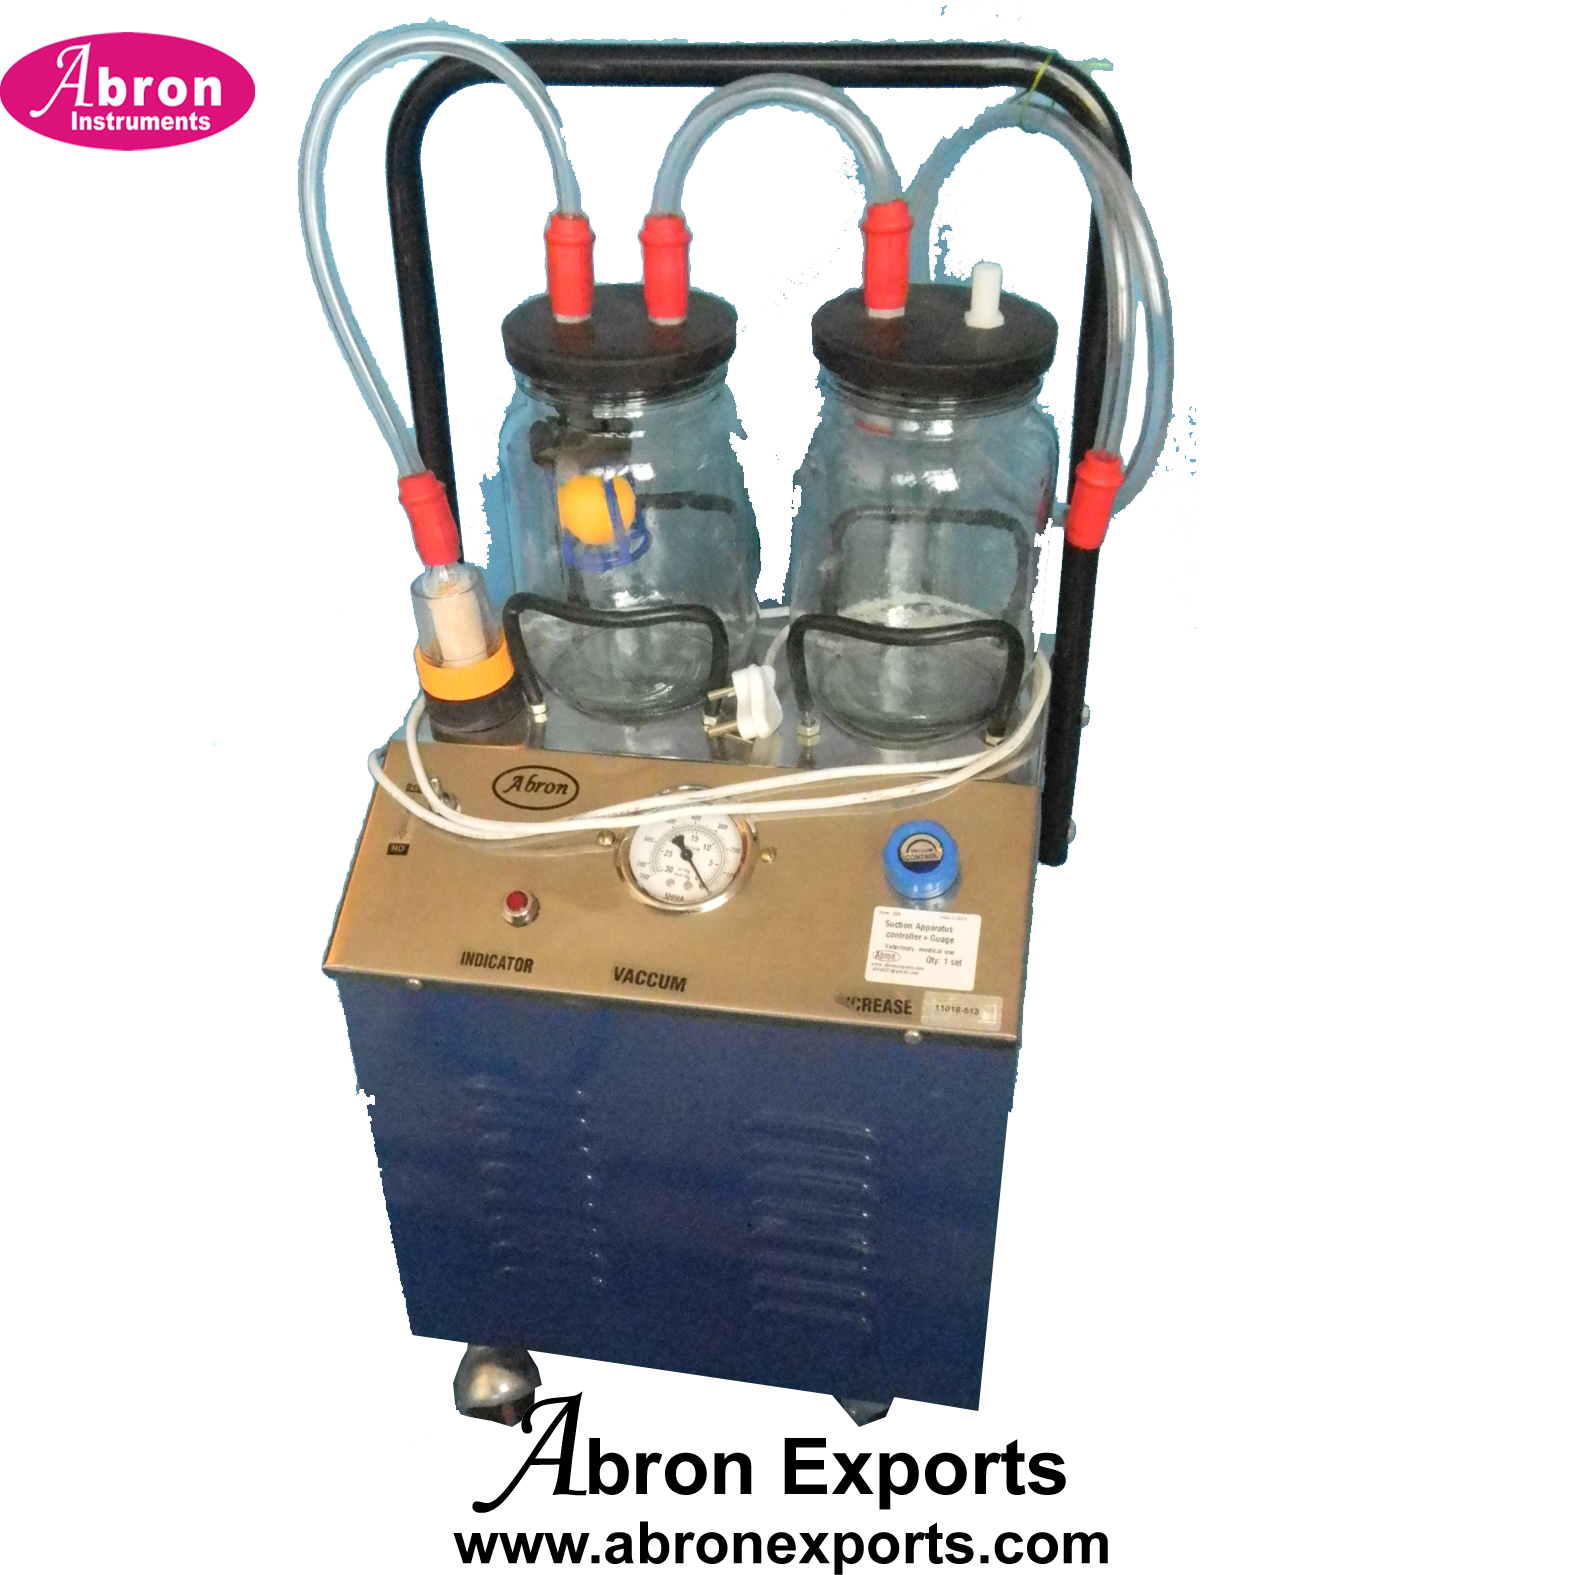 Suction Machine With Glass Bottles Vacuum Pump Tubes Portable Abron ABM-2312A